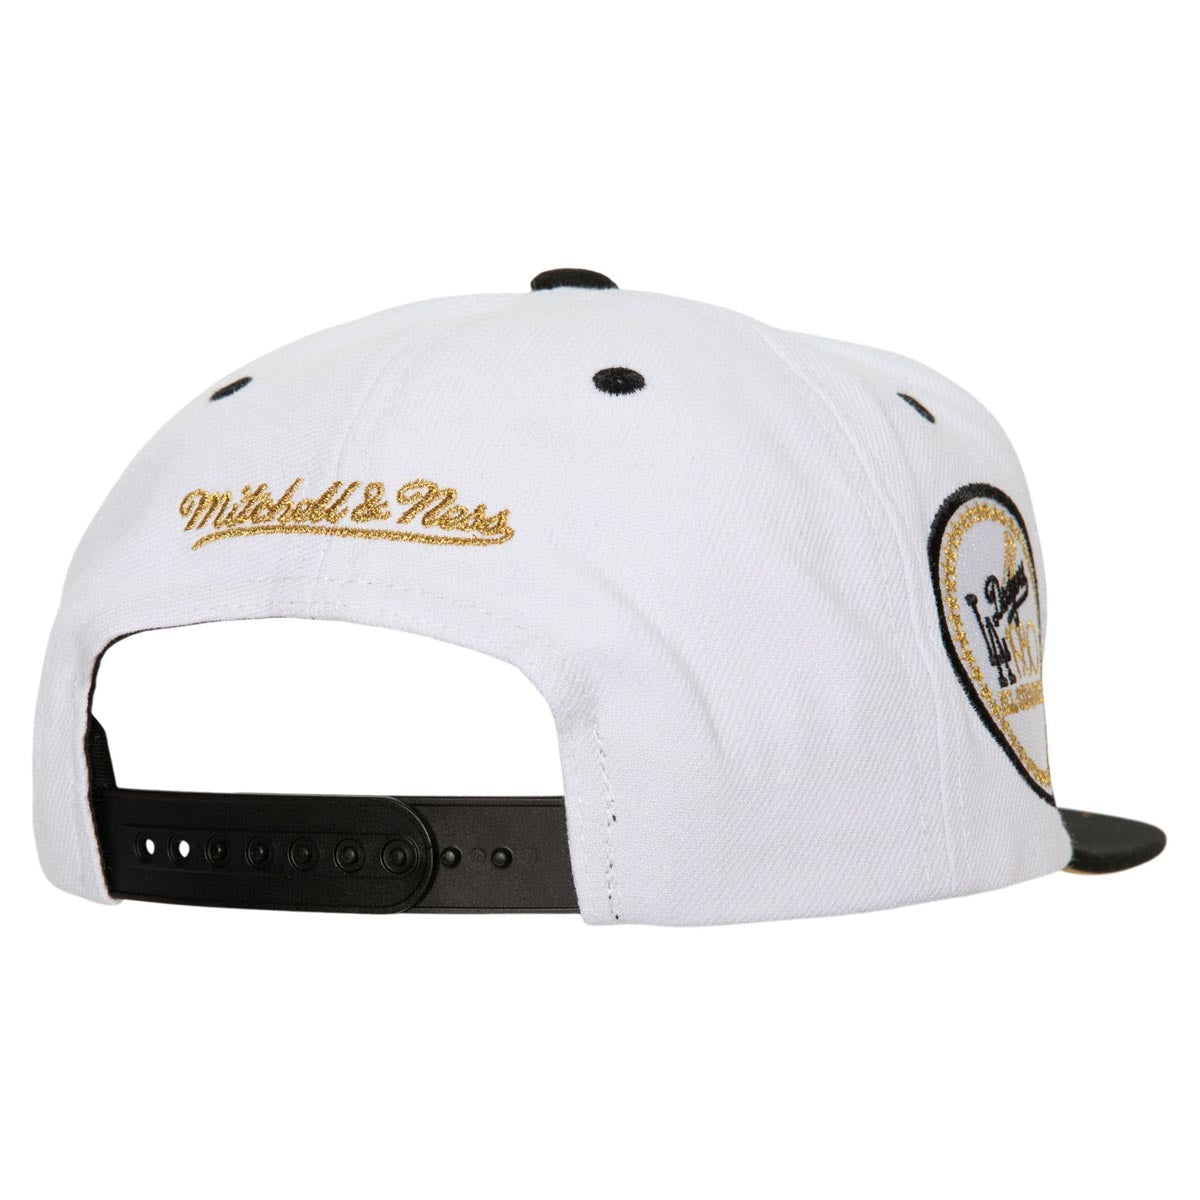 Mitchell & Ness x MLB Mvp Snapback Coop Dodgers Hat - White image 2